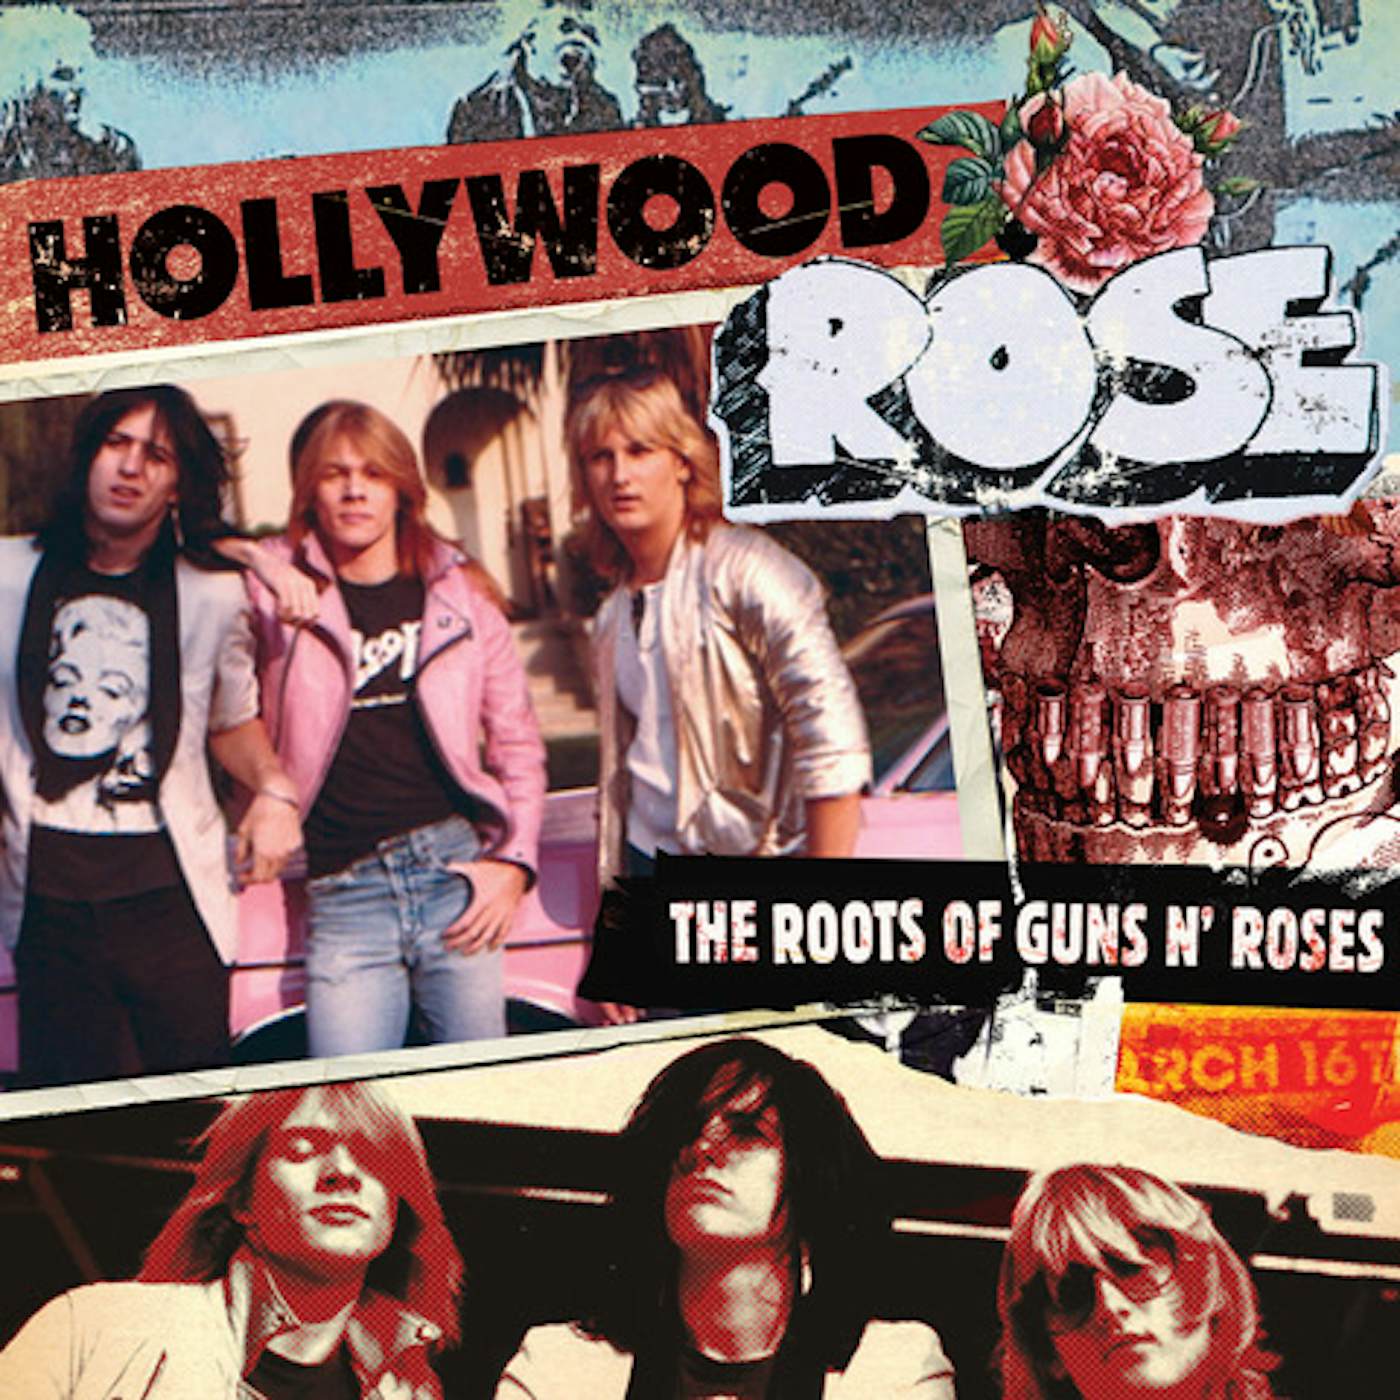 Hollywood Rose ROOTS OF GUNS N' ROSES Vinyl Record